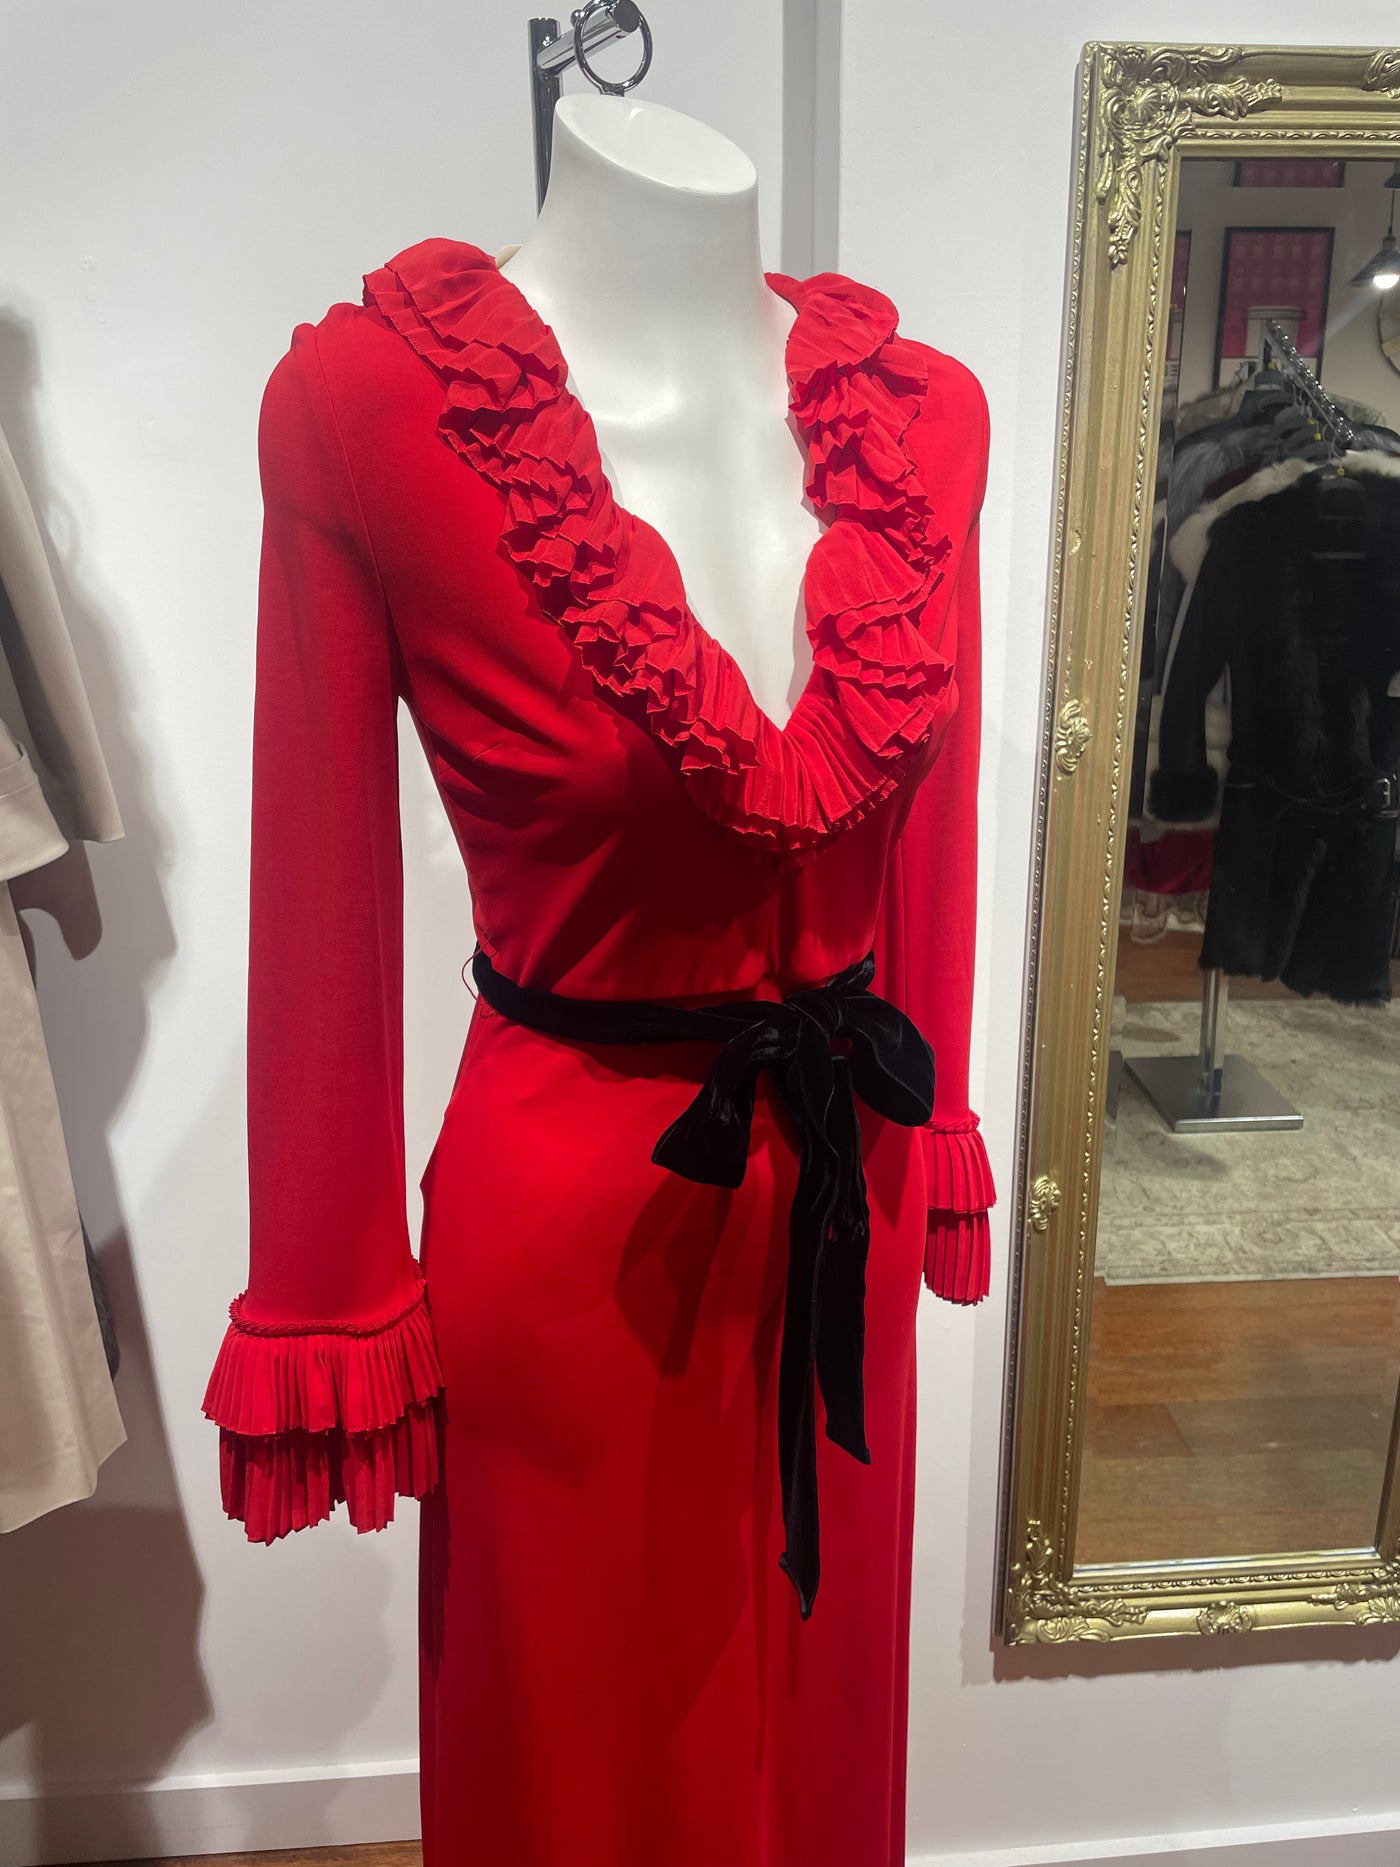 Gucci Long Red dress size M